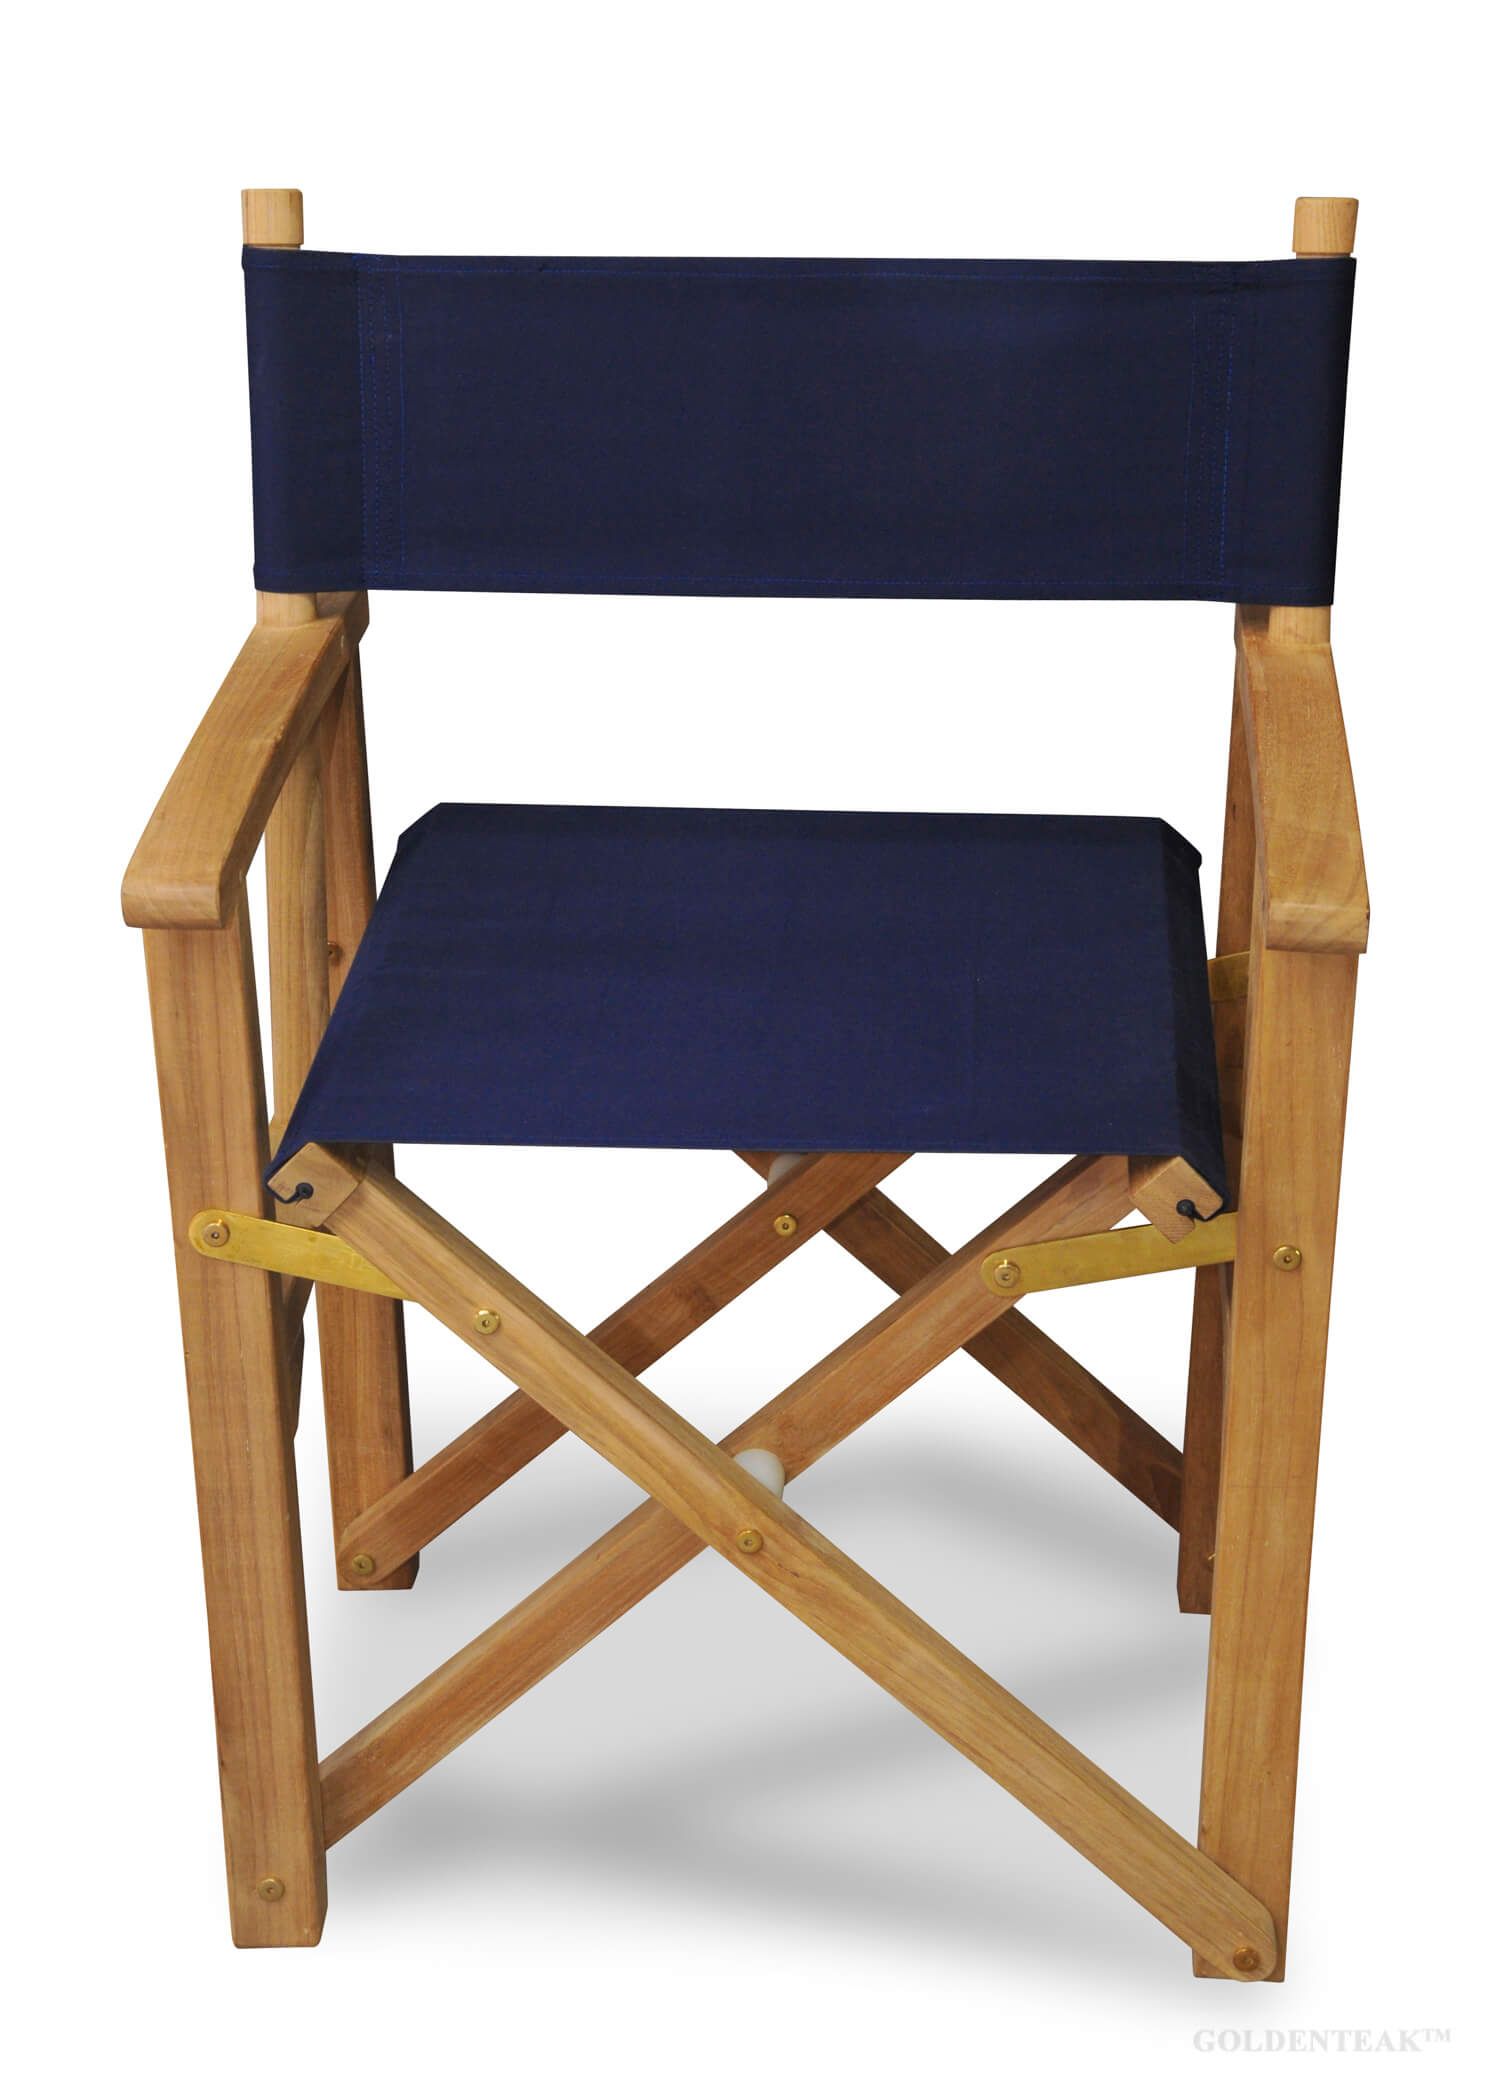 Outdoor Cushion Goldenteak Rocking Chair Seat Cushion Sunbrella